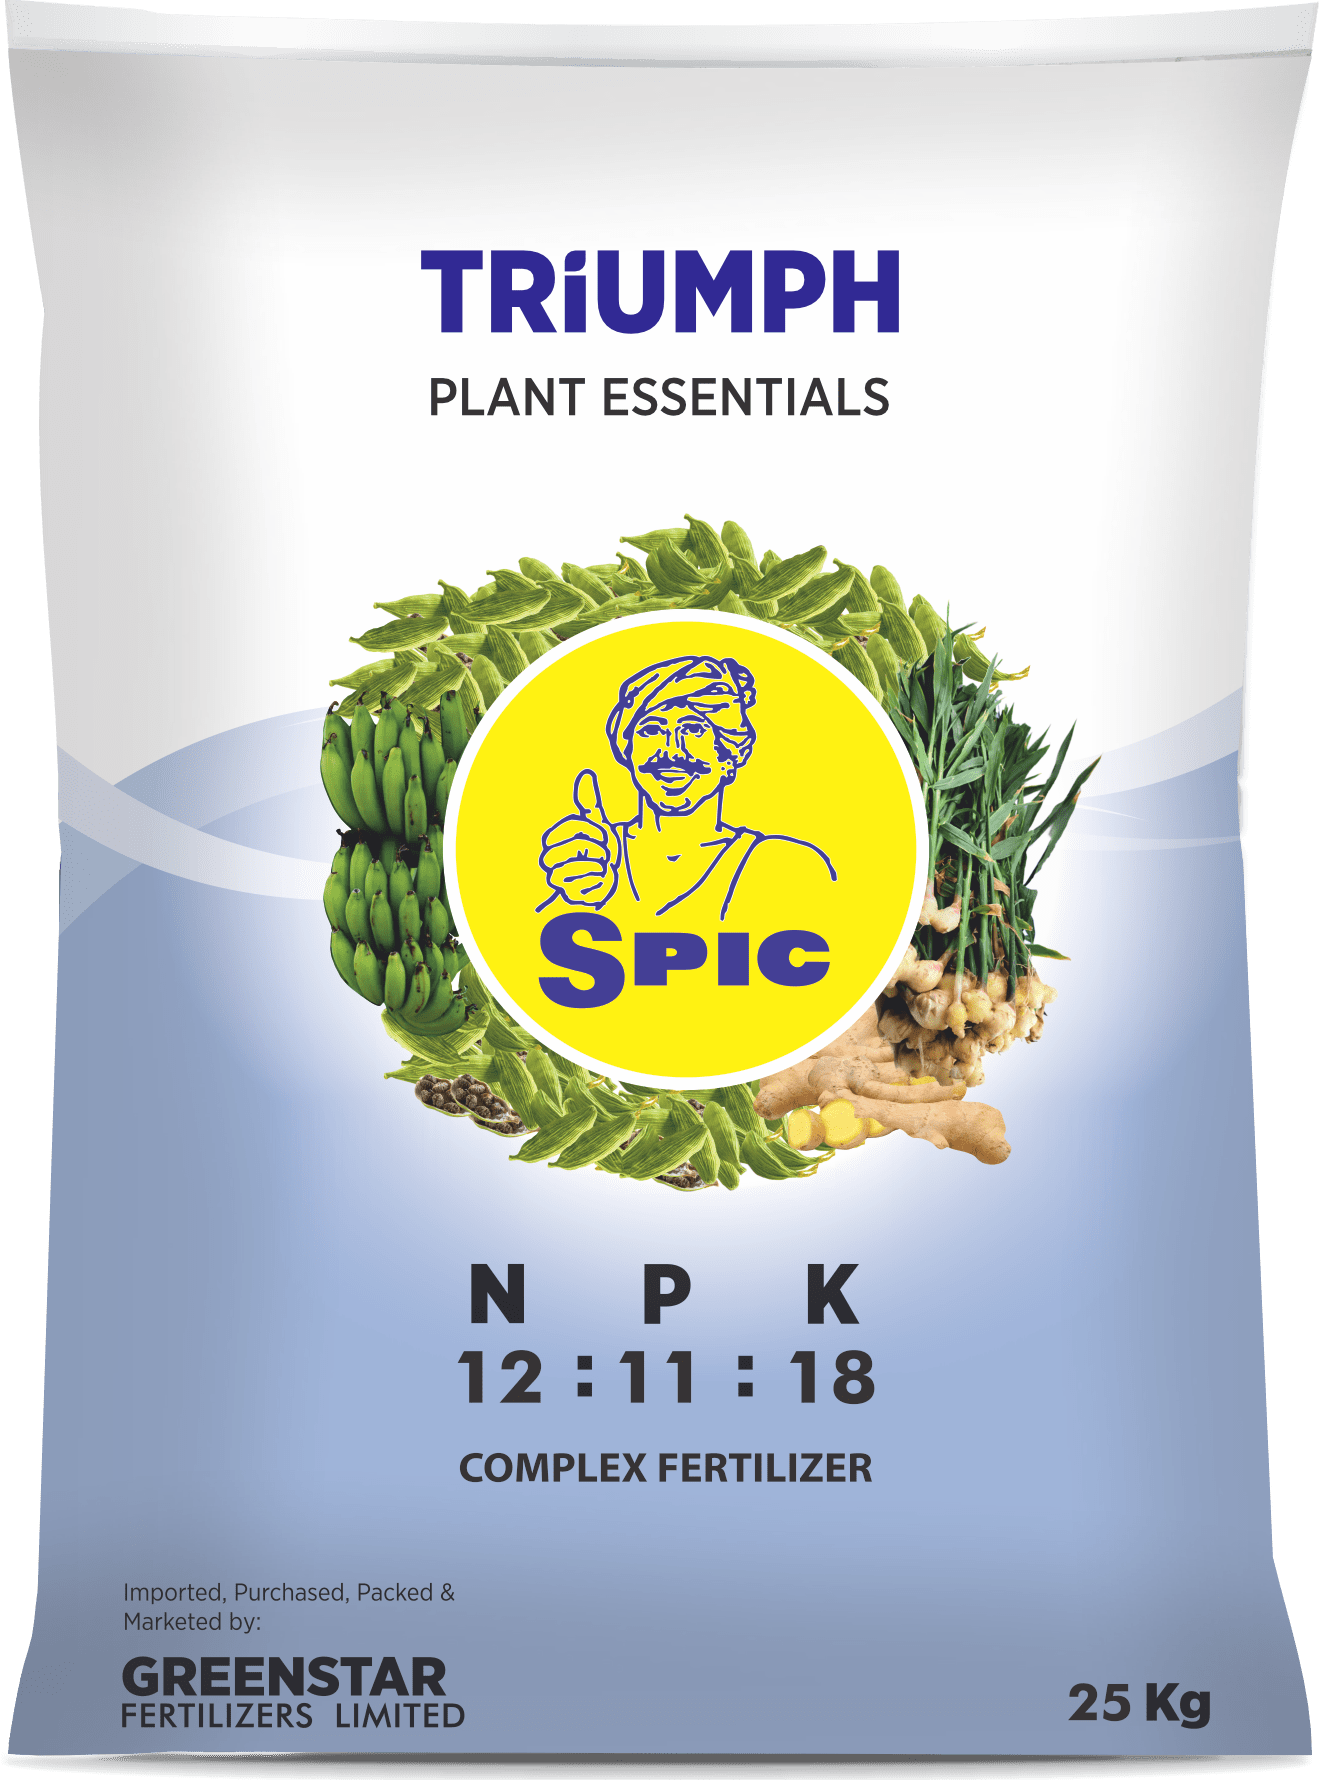 SPIC Triumph (NPK 12 11 18)